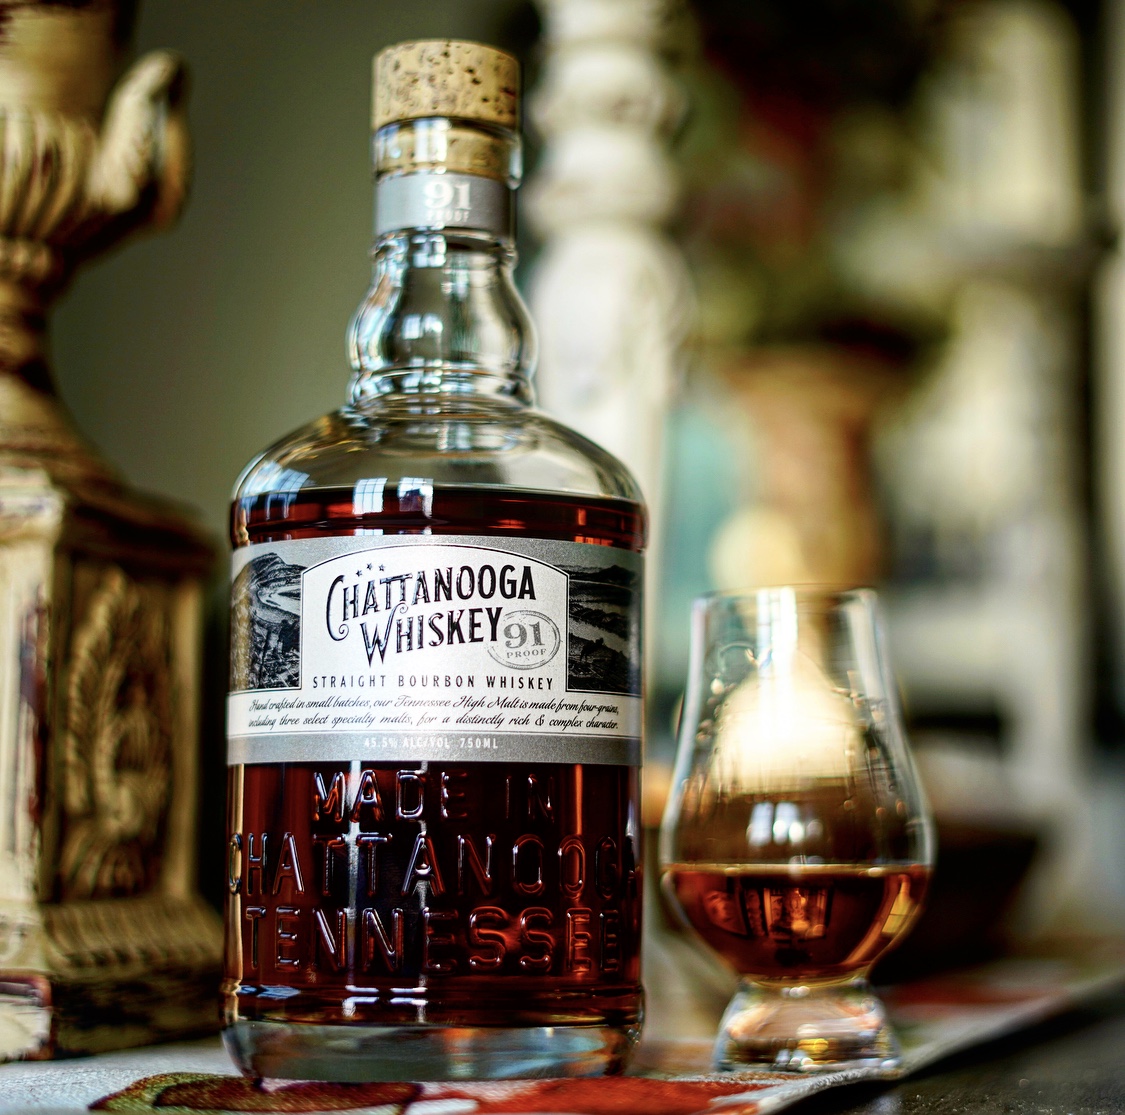 Chattanooga Whiskey 91 Straight Bourbon Whiskey